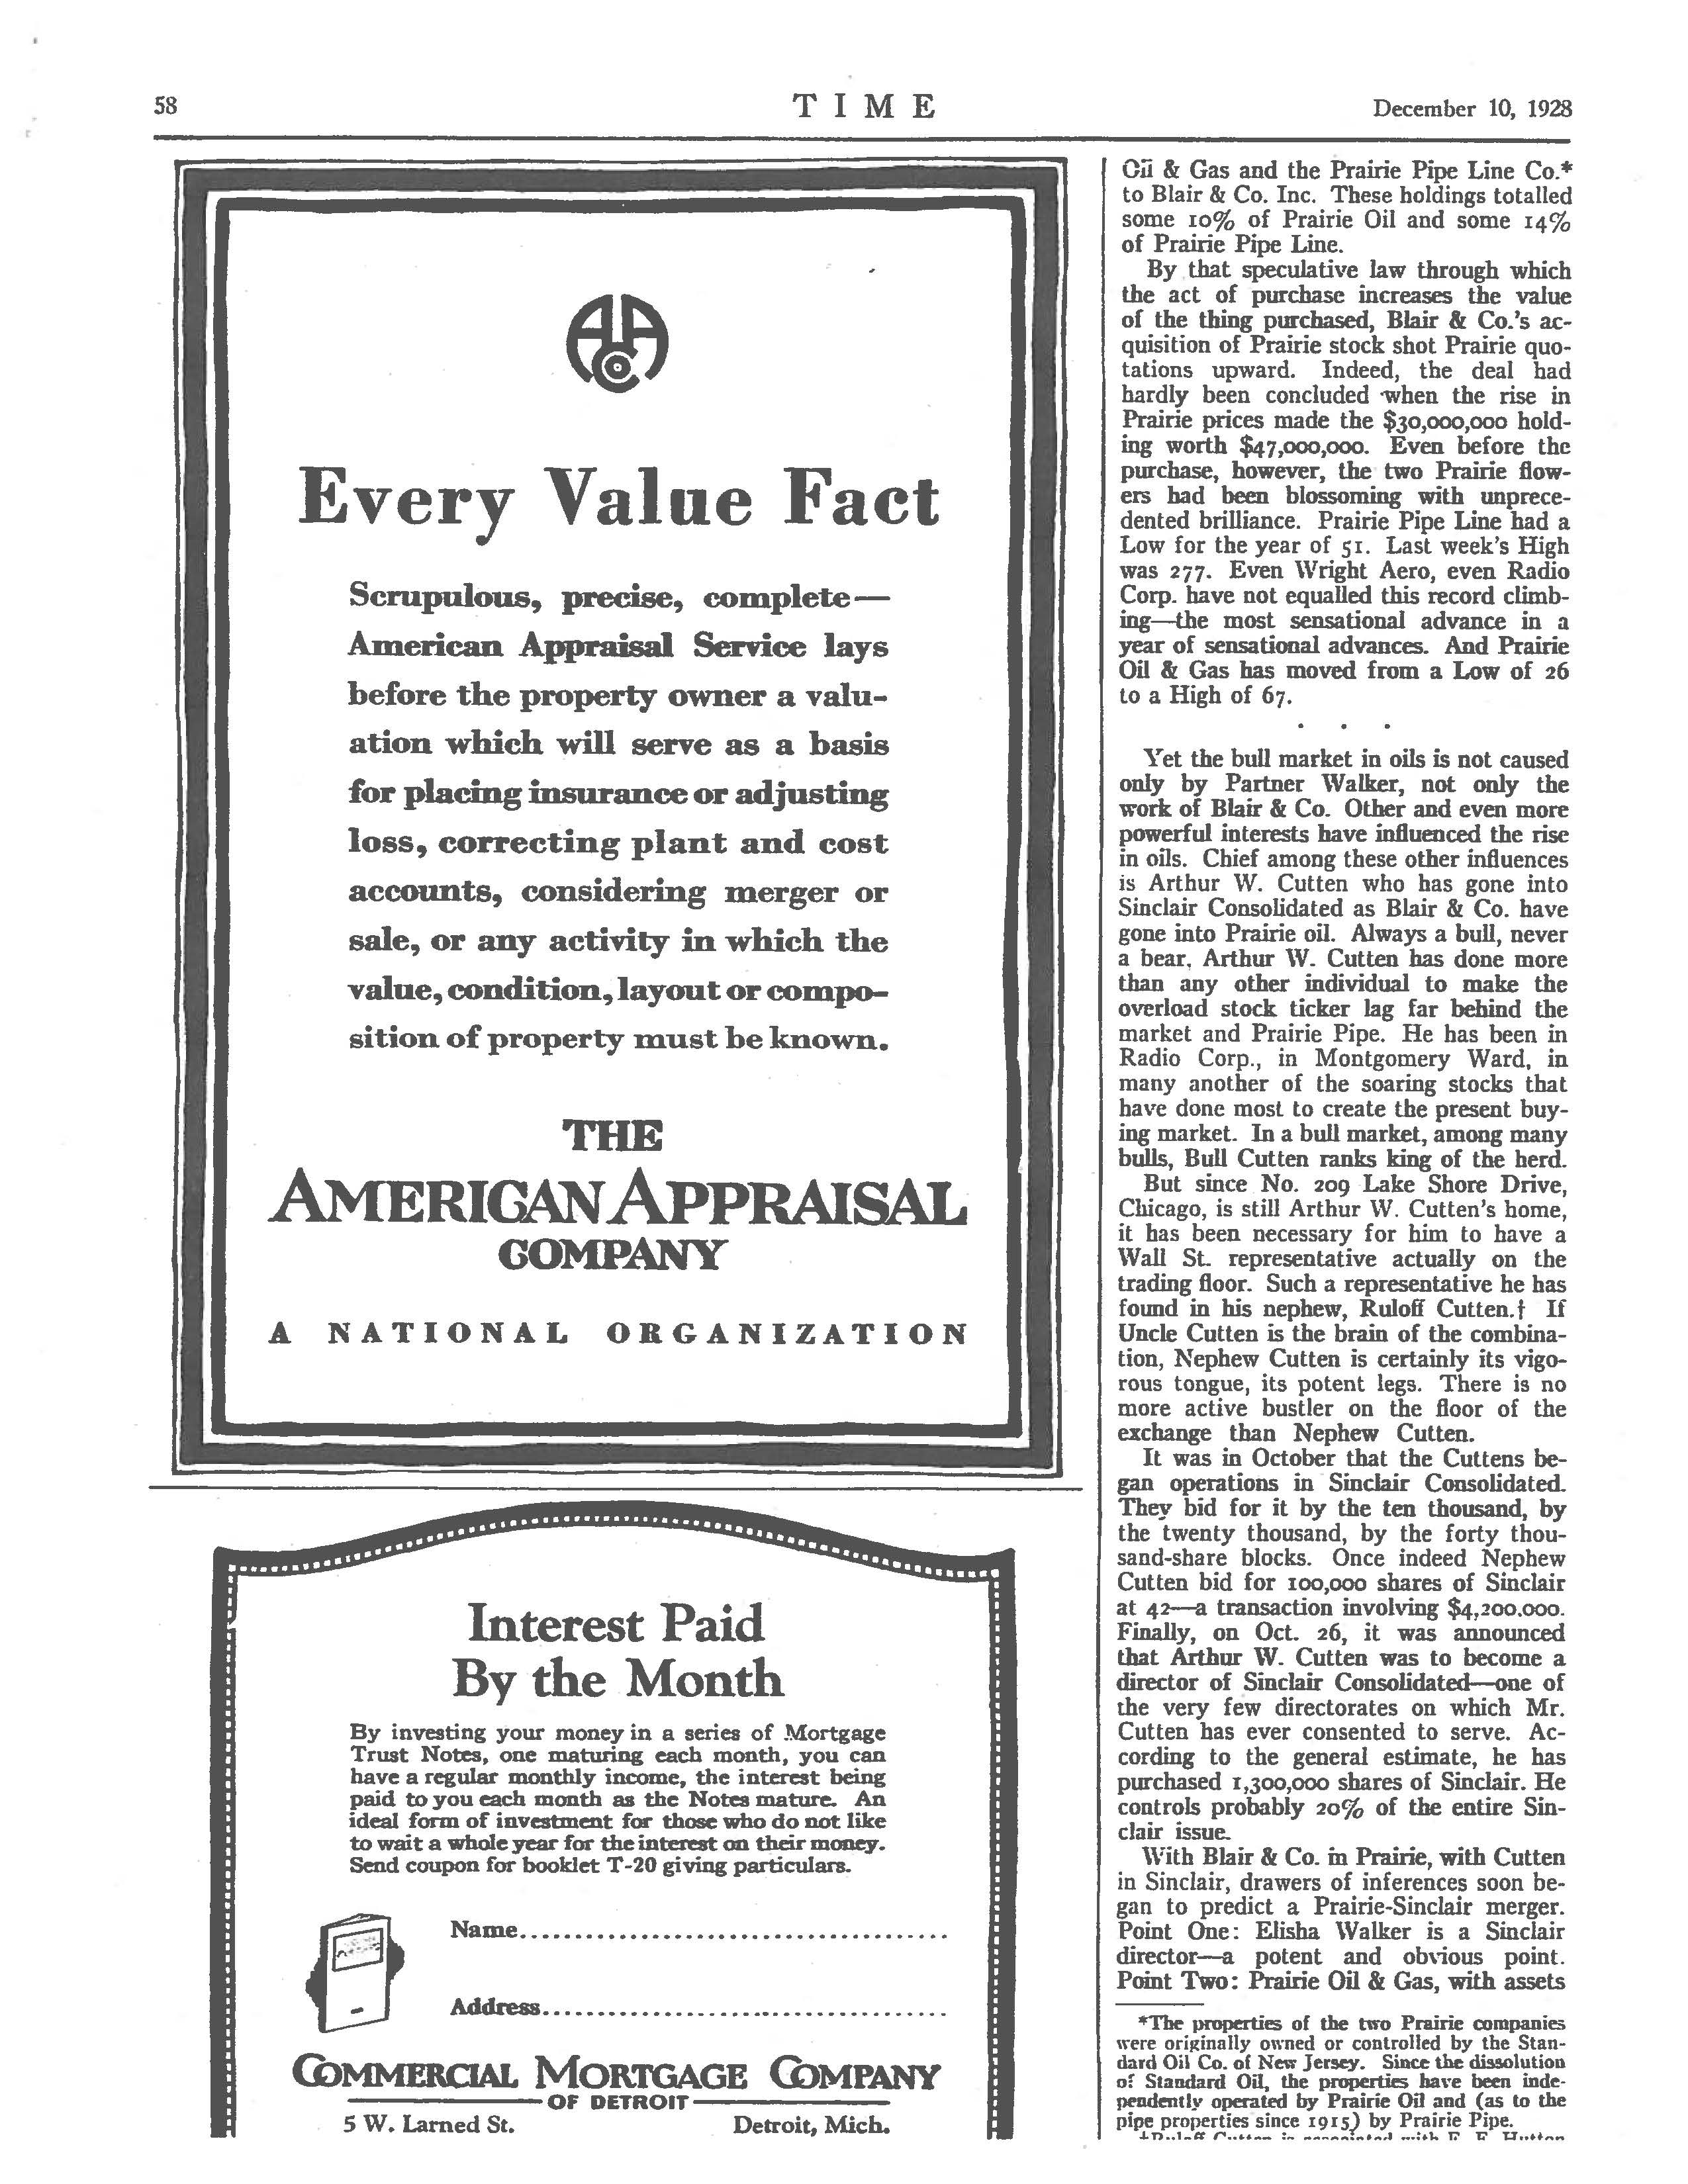 Arthur Cutten in Time Magazine December 10, 1928